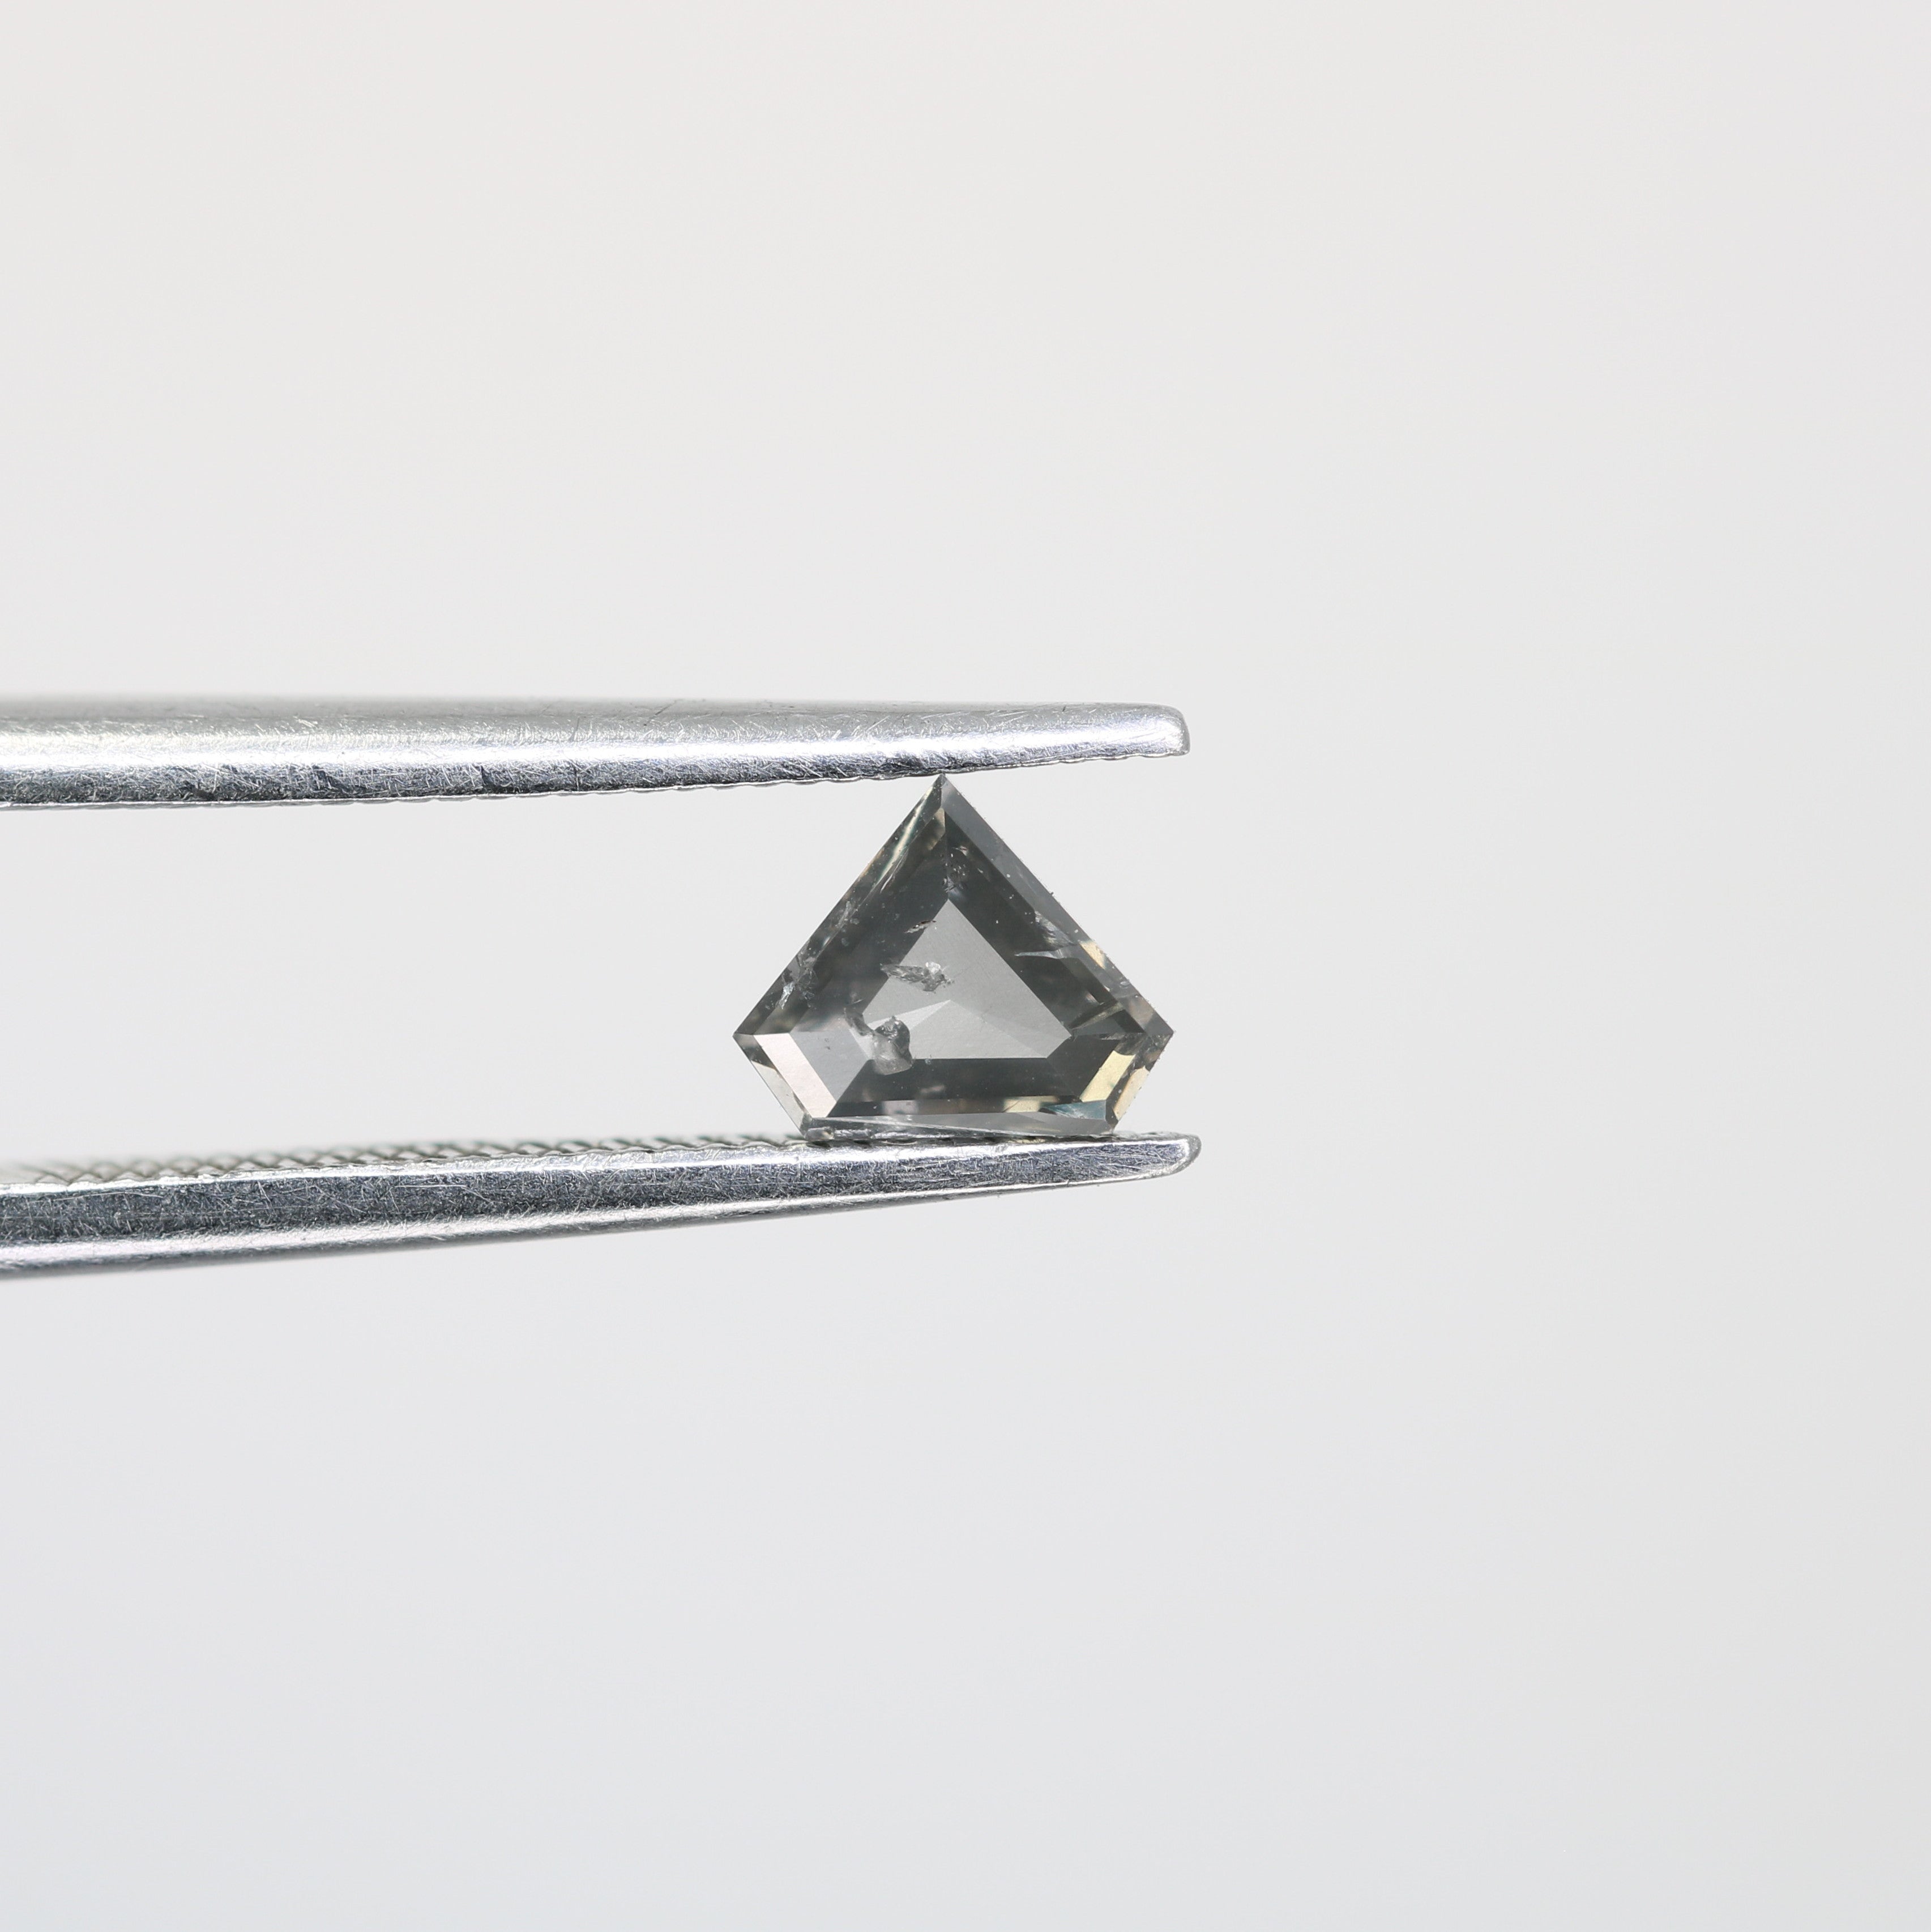 0.38 CT Diamond Cut Salt And Pepper Diamond For Engagement Ring